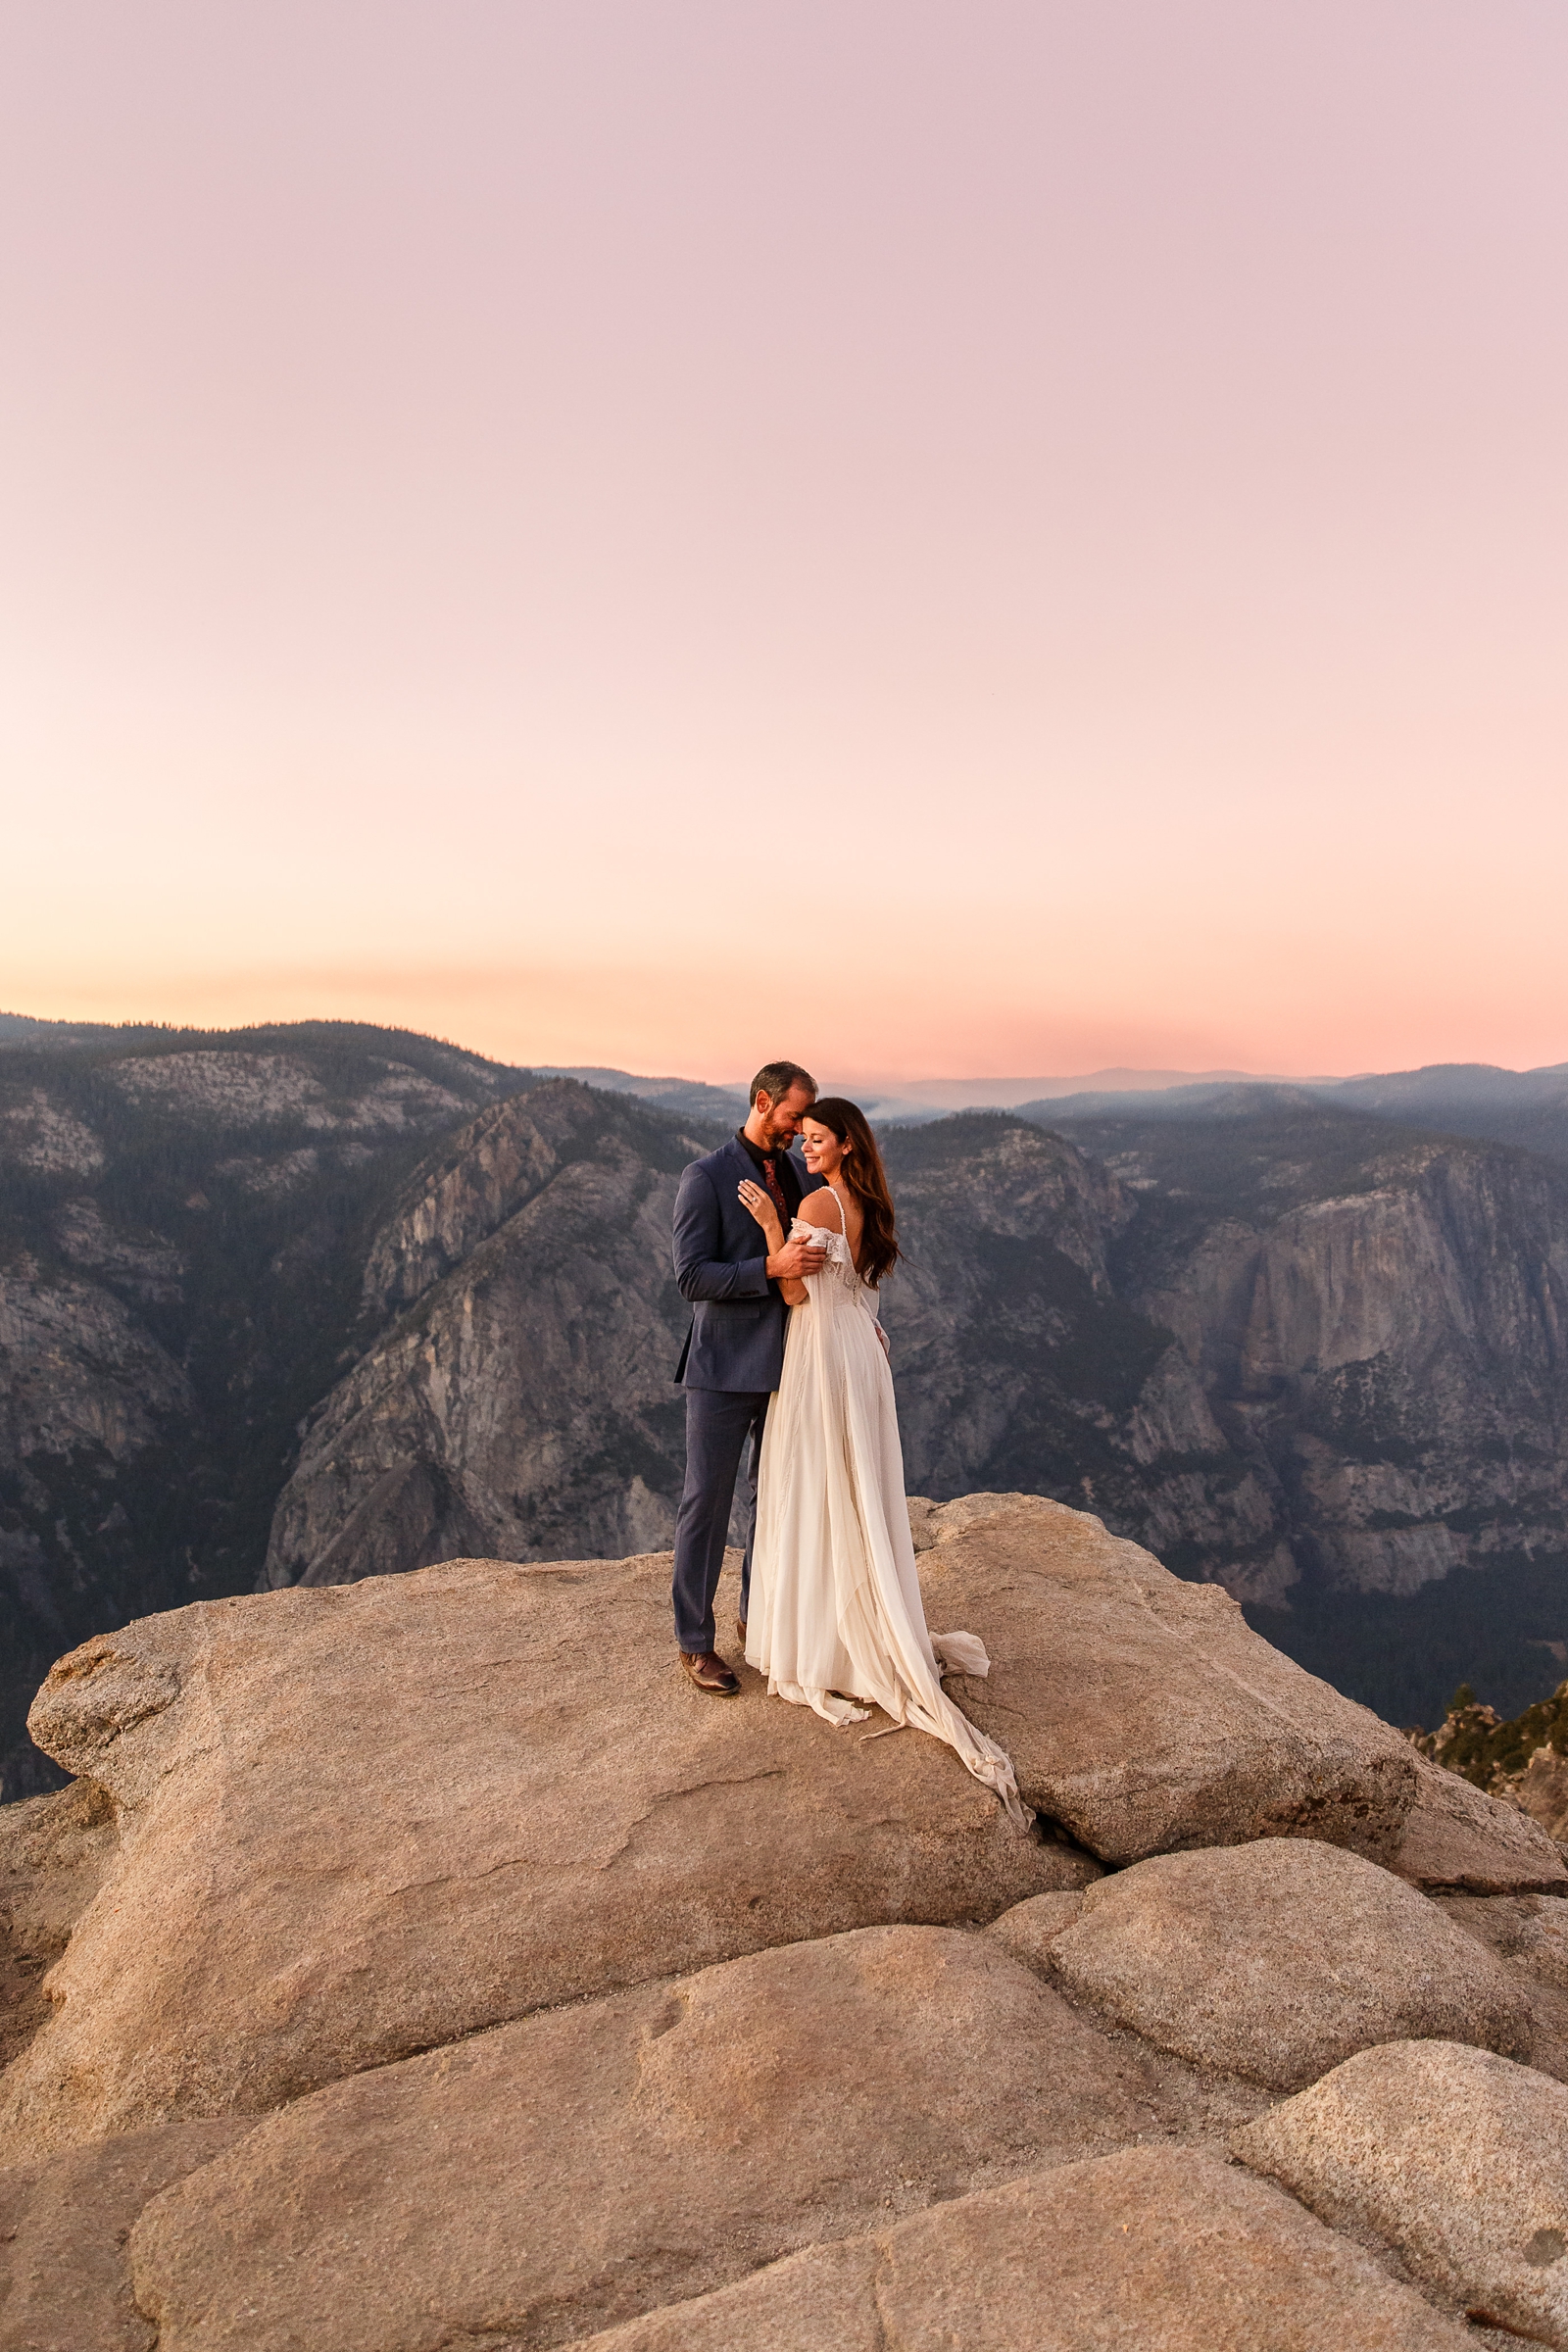 Romantic snuggles at this couple's sunset Yosemite elopement.